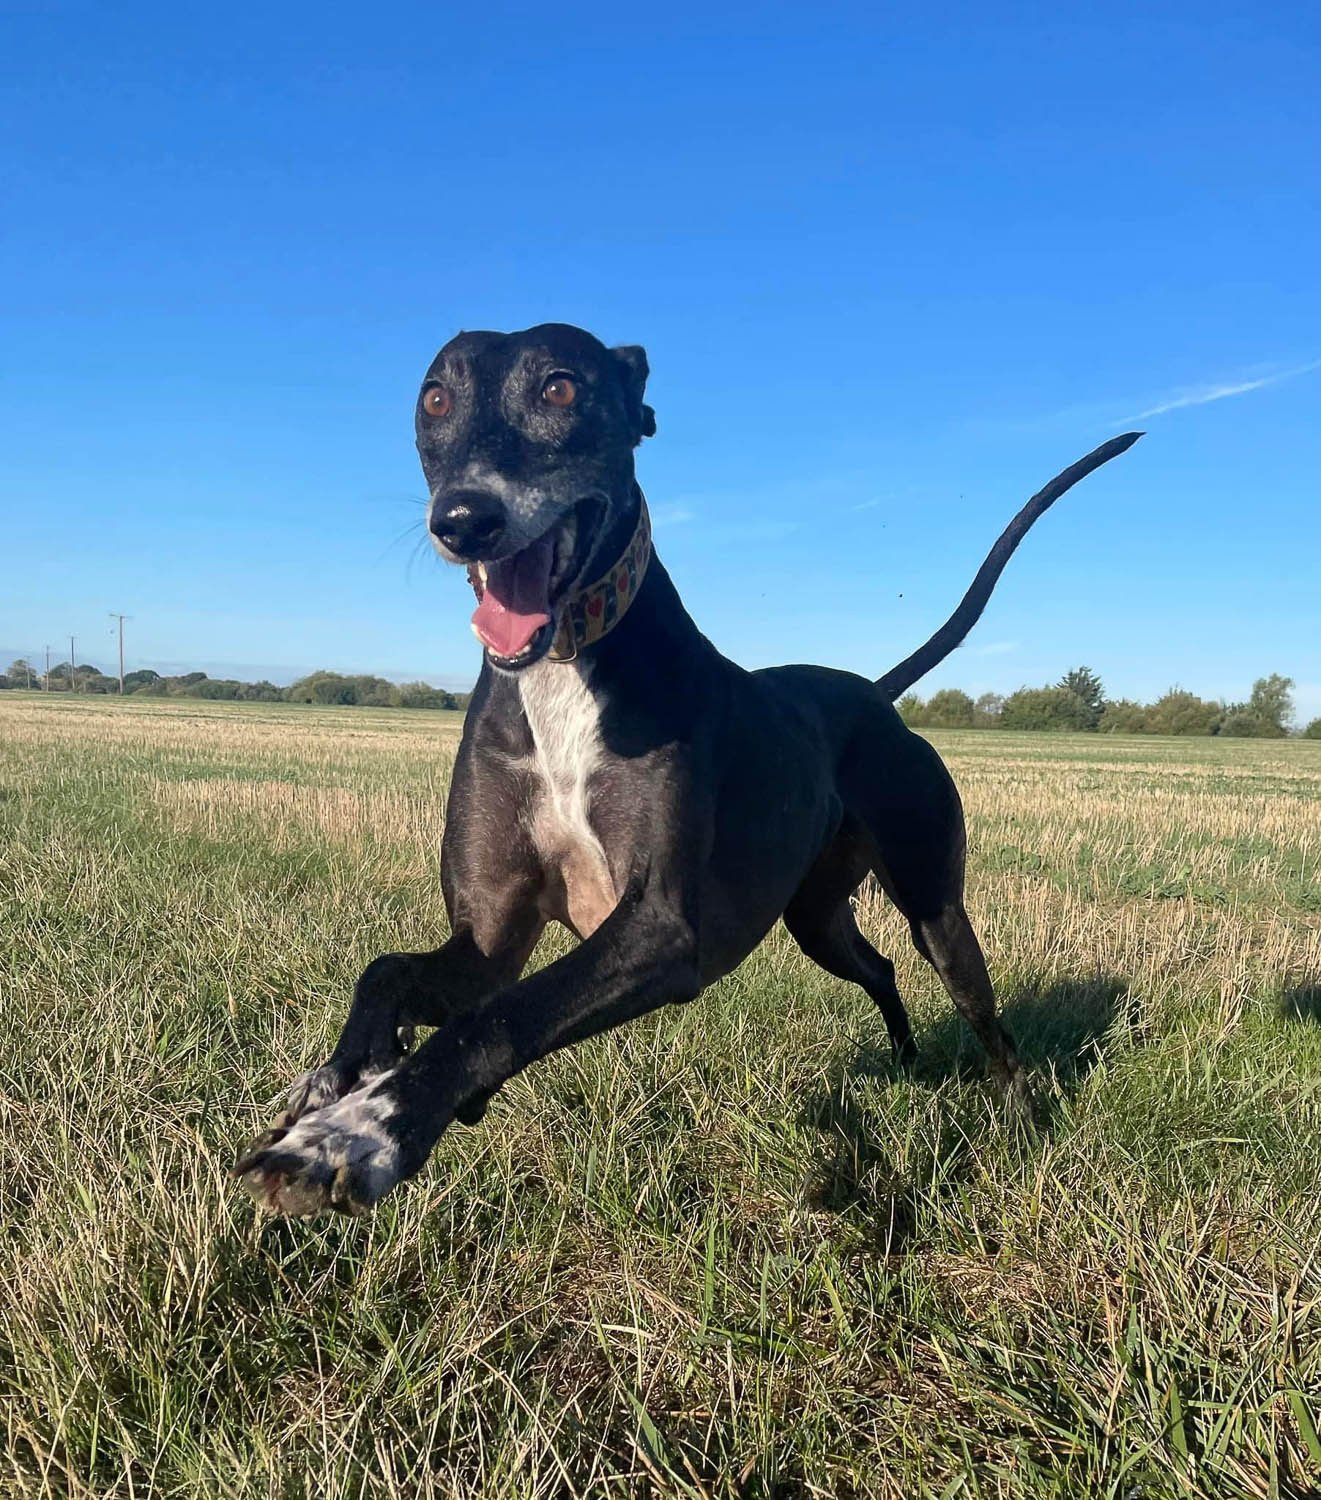 A black Dobermann dog leaping through a grassy field